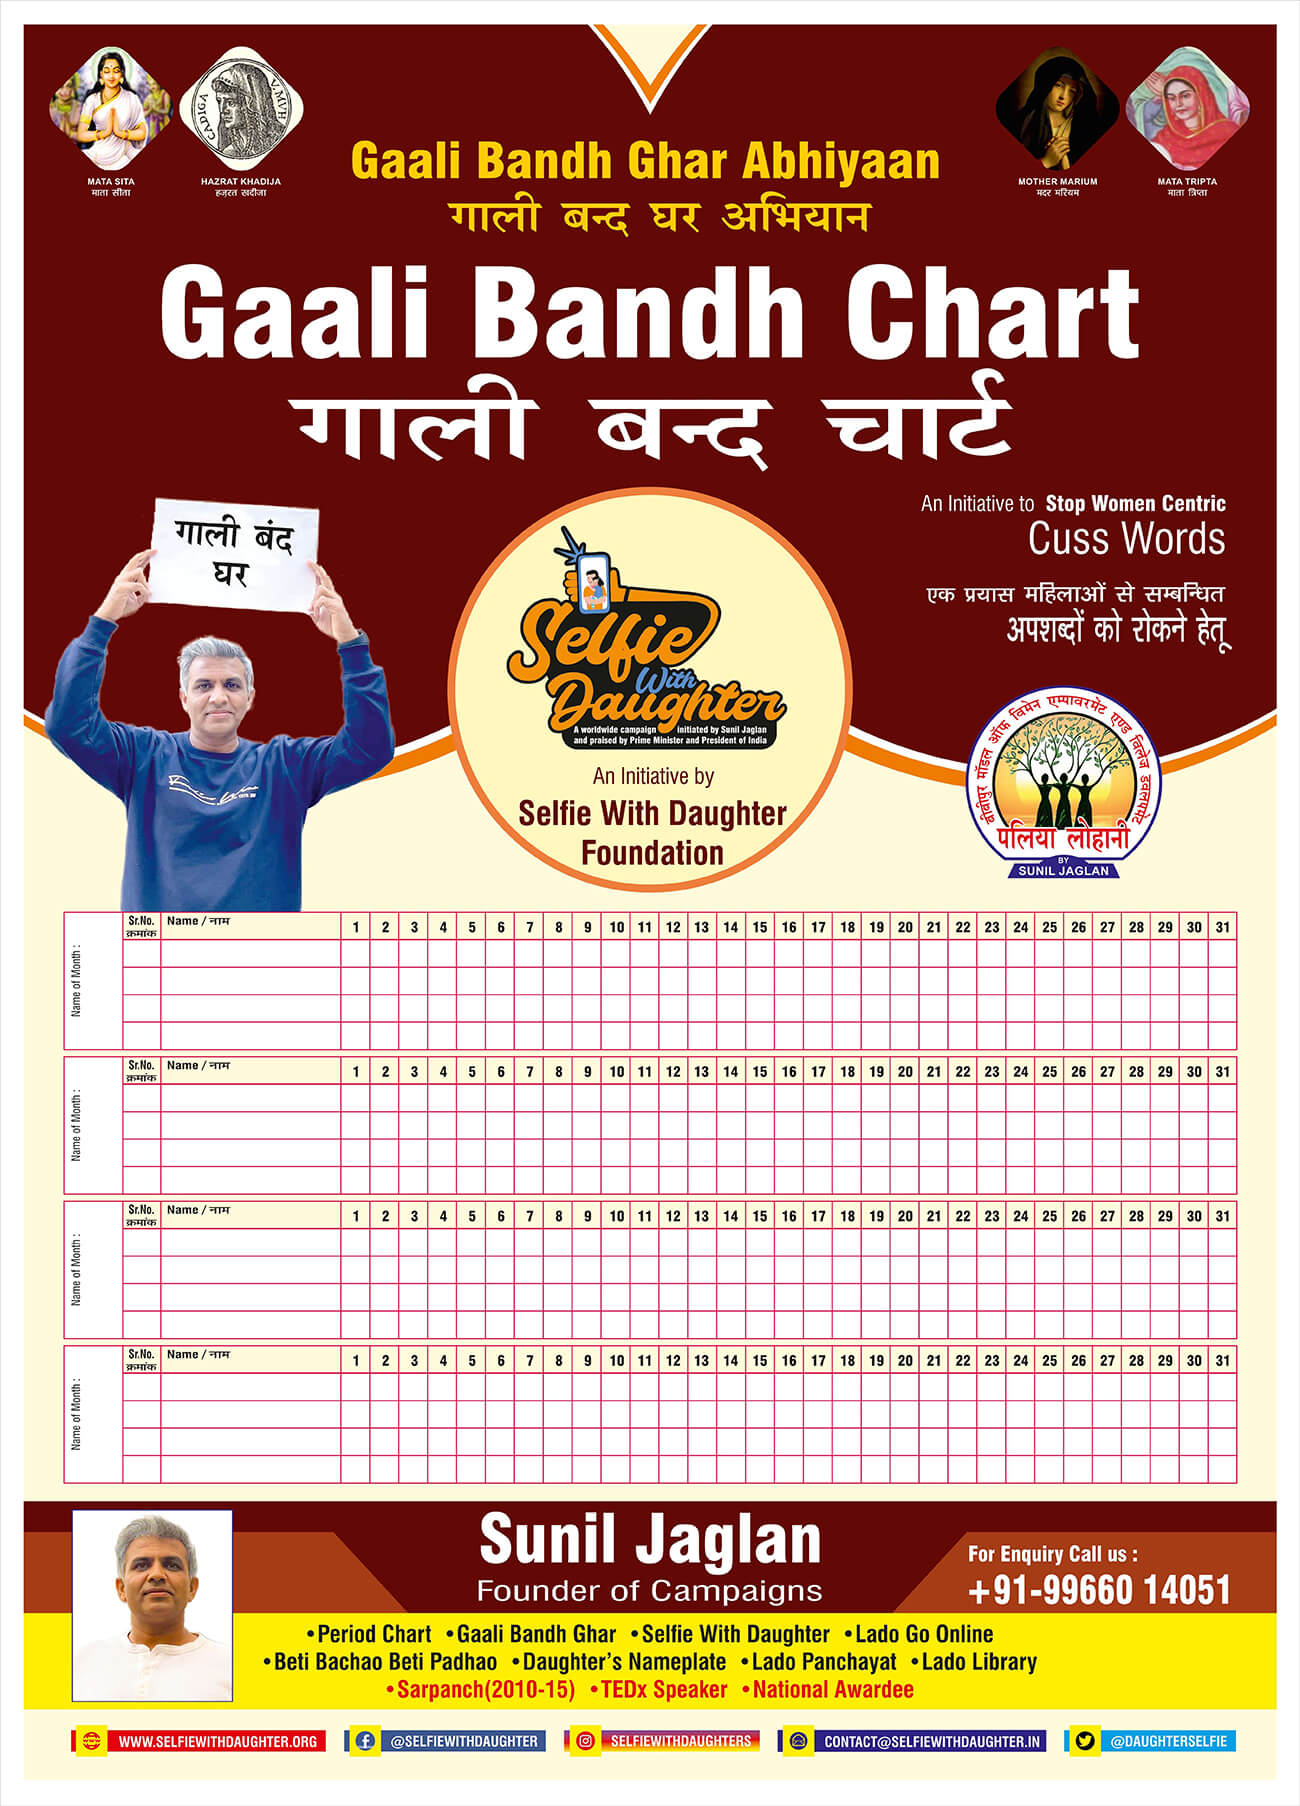 Gali Band (Ban on Abuse )Ghar campaign